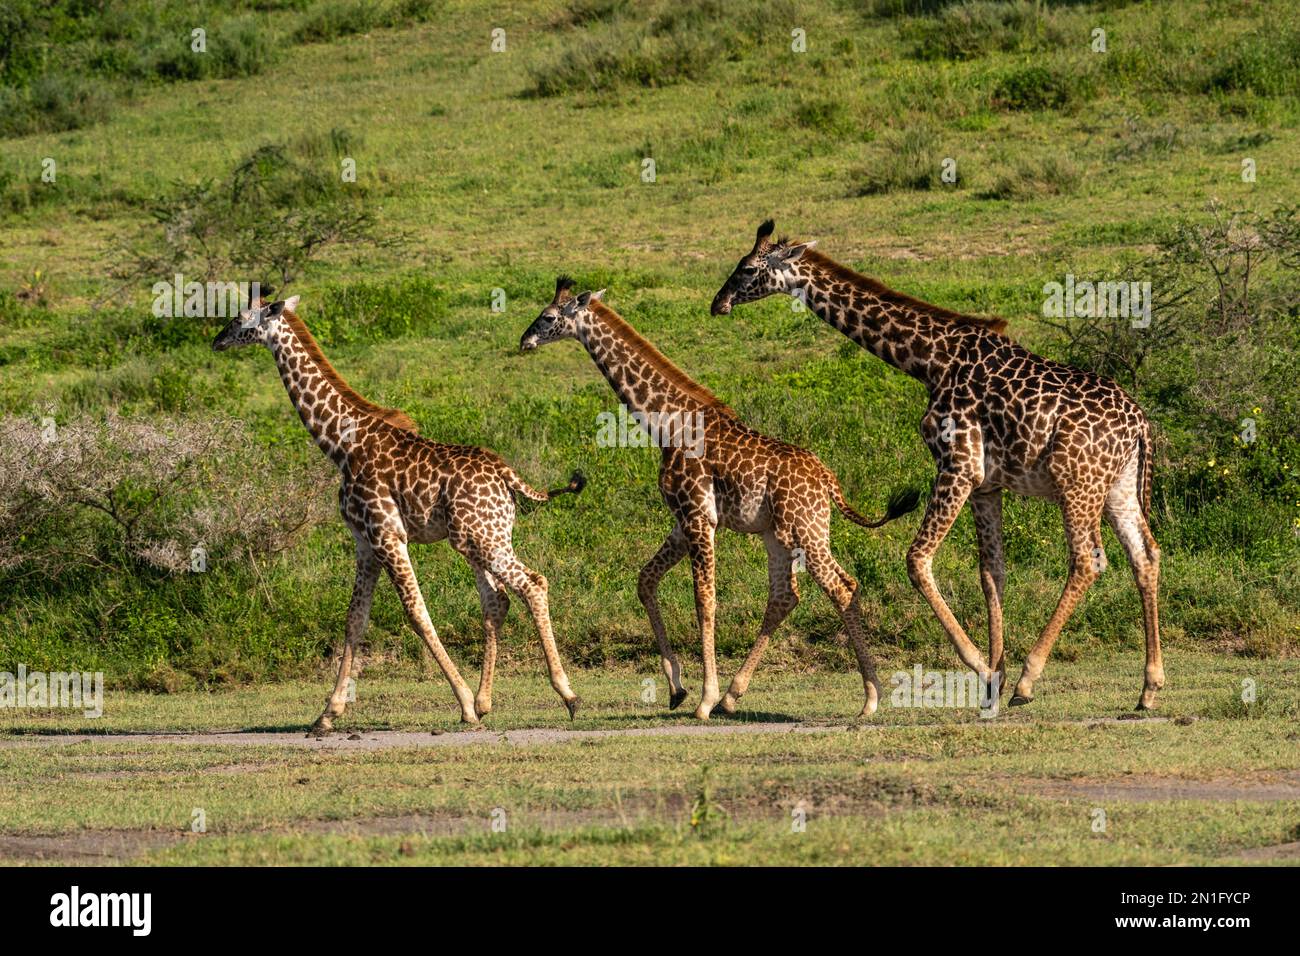 Masai girafes (Giraffa camelopardalis tippelskirchi), zone de conservation du Ndutu, Serengeti, Tanzanie, Afrique de l'est, Afrique Banque D'Images